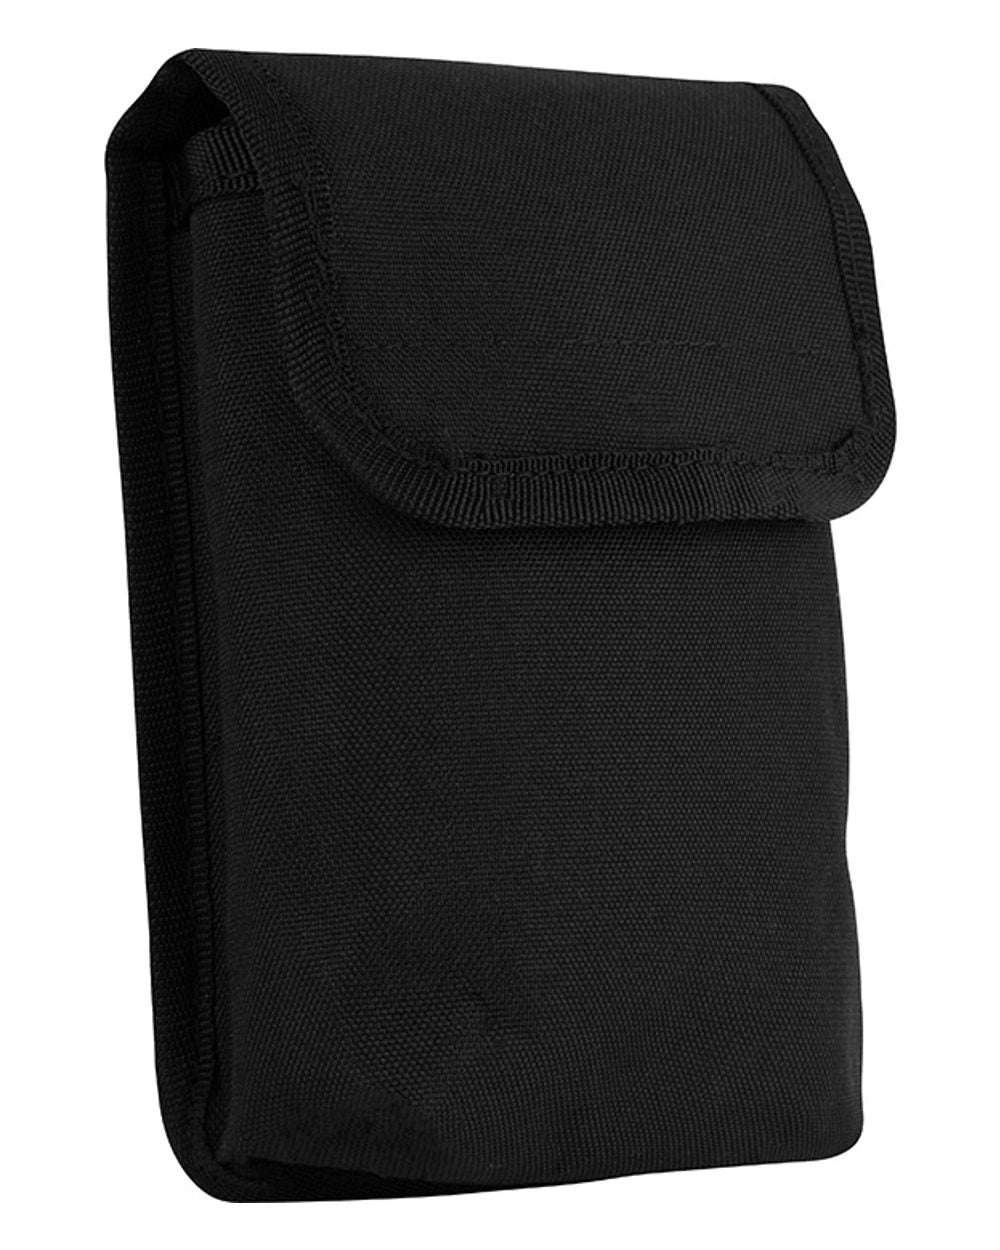 Viper Notebook Pouch in Black